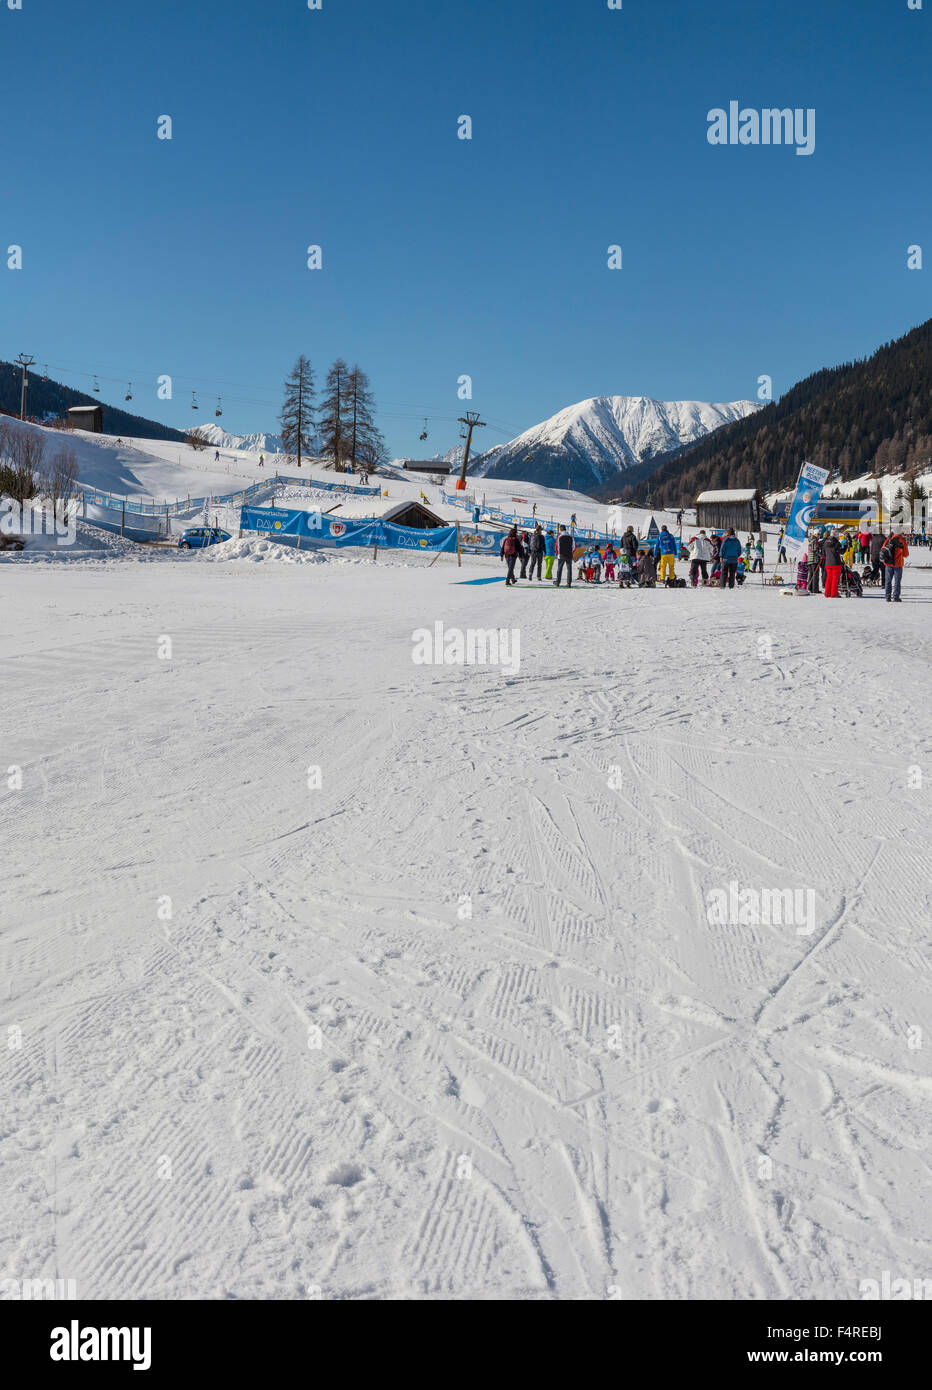 Switzerland, Europe, Graubünden, Grisons, landscape, winter, snow, ice, mountains, hills, people, Ski lift, Bolgen, Davos, Stock Photo